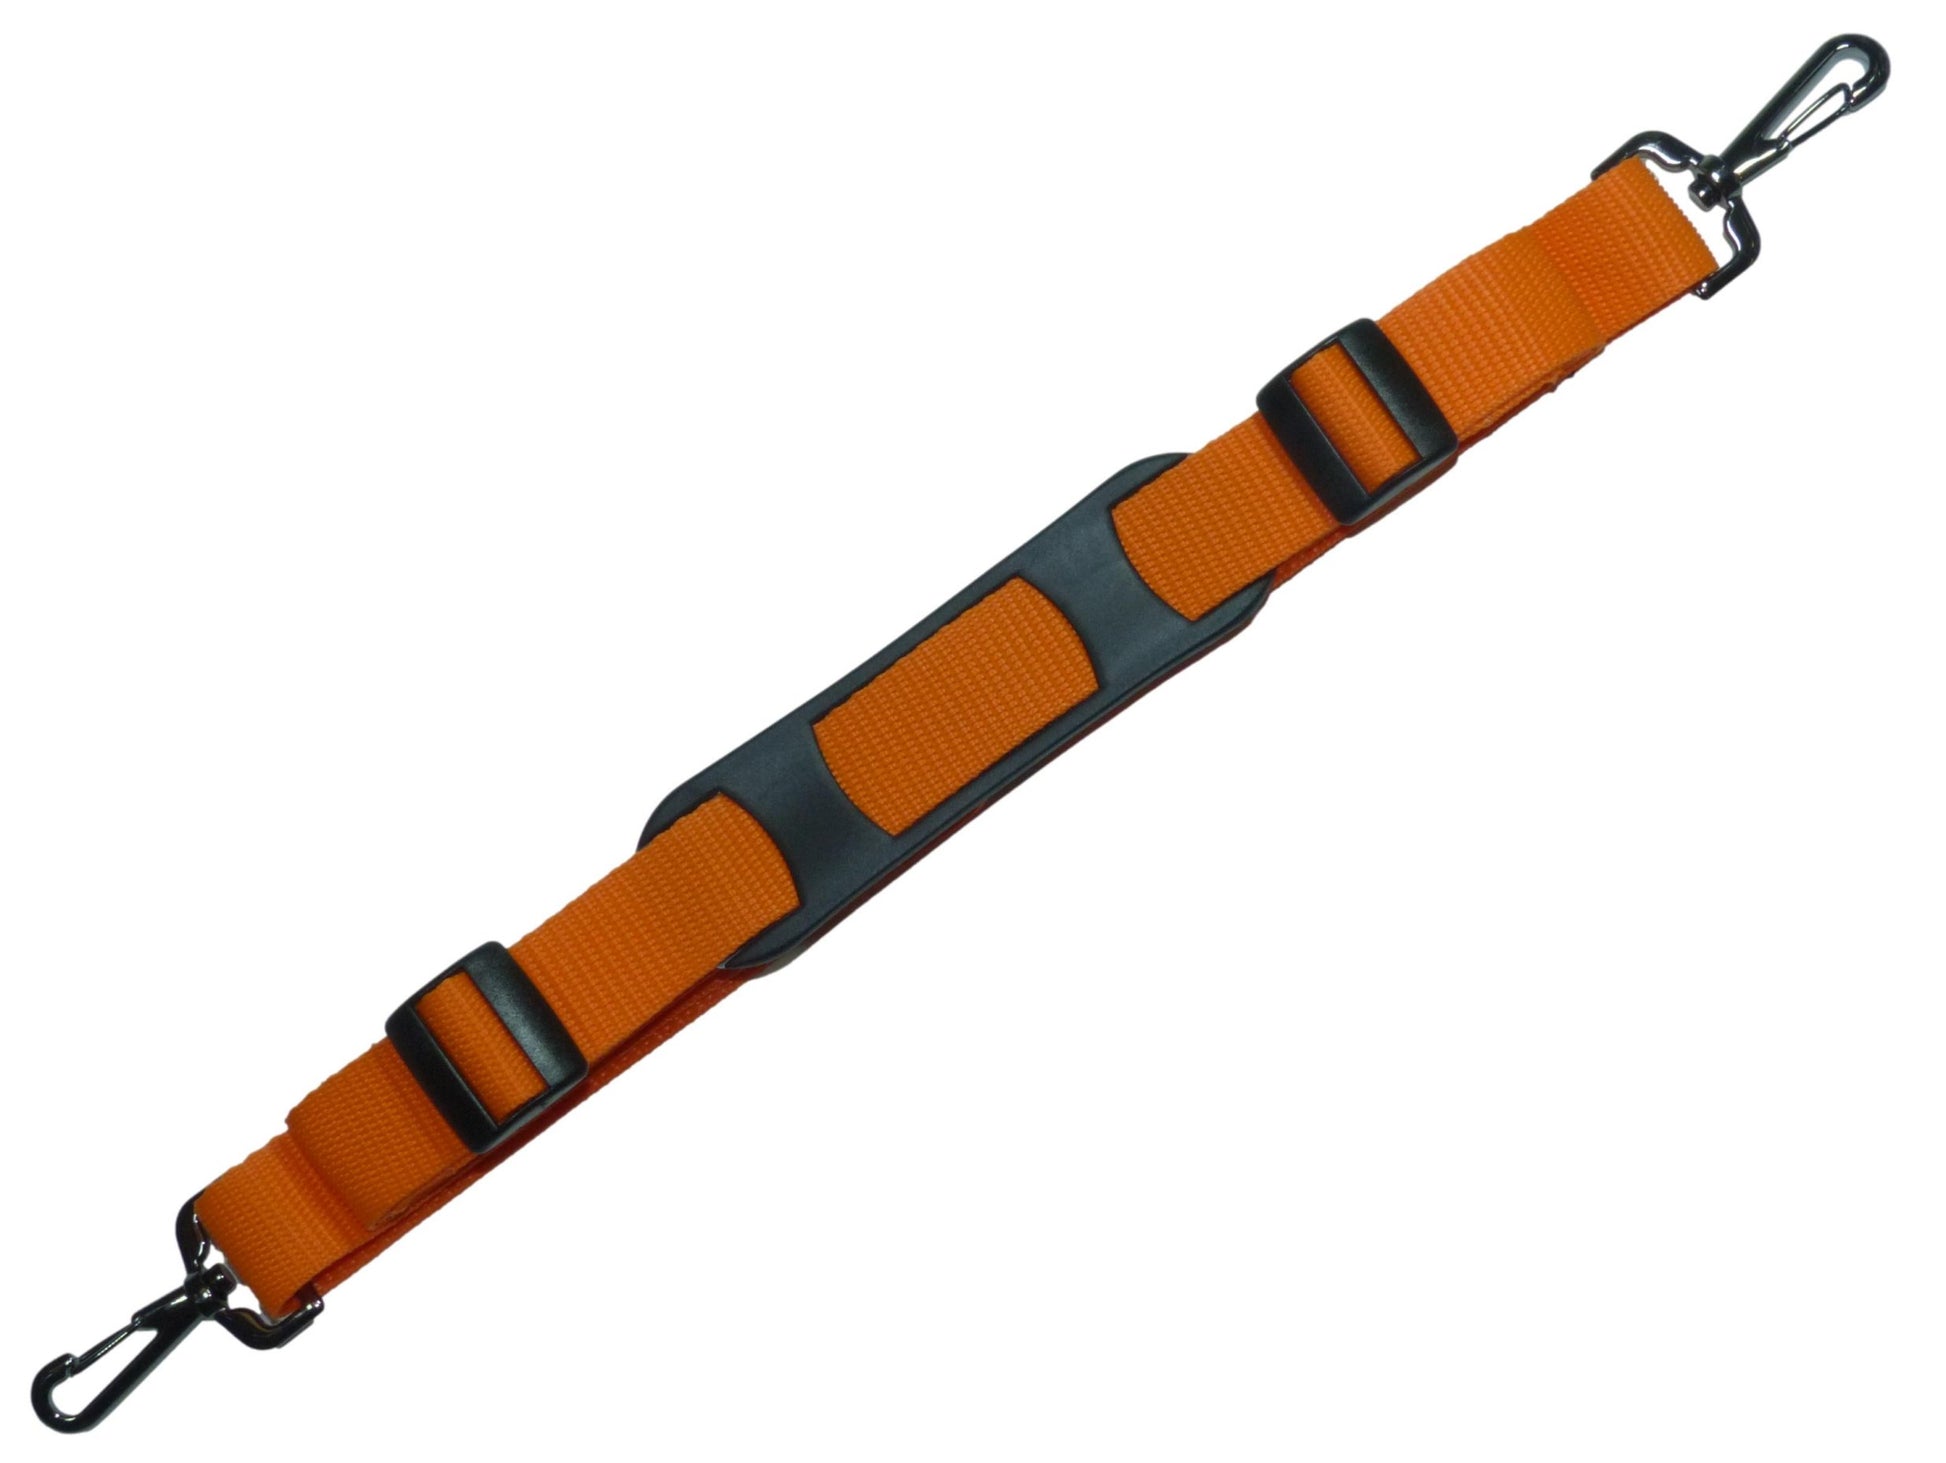 Benristraps 25mm Bag Strap with Metal Buckles and Shoulder Pad, 150cm in orange